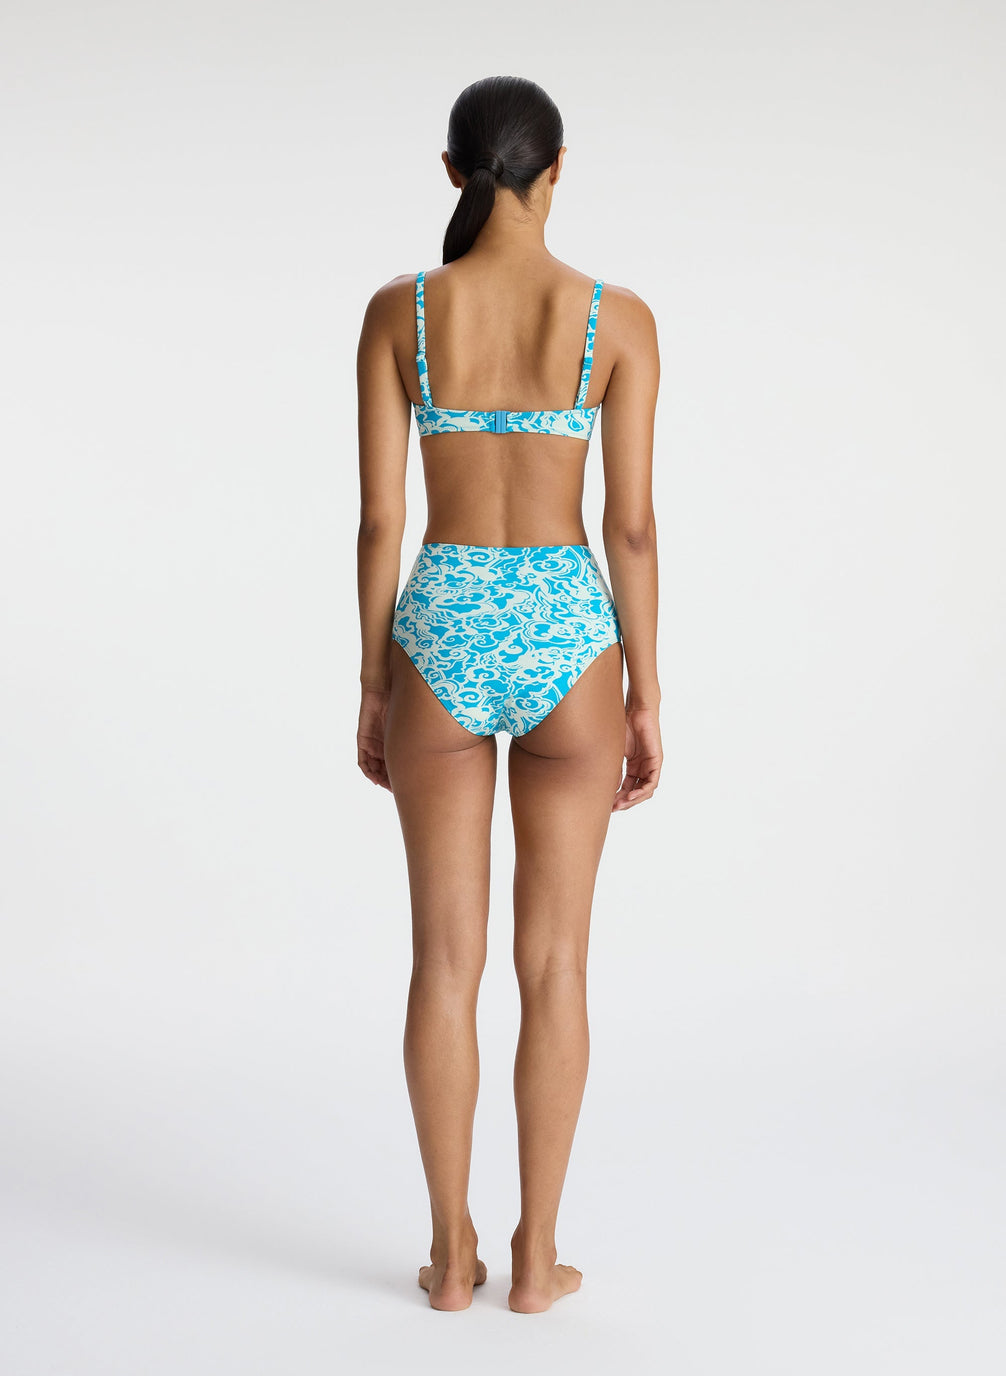 back view of woman wearing aqua print bikini set